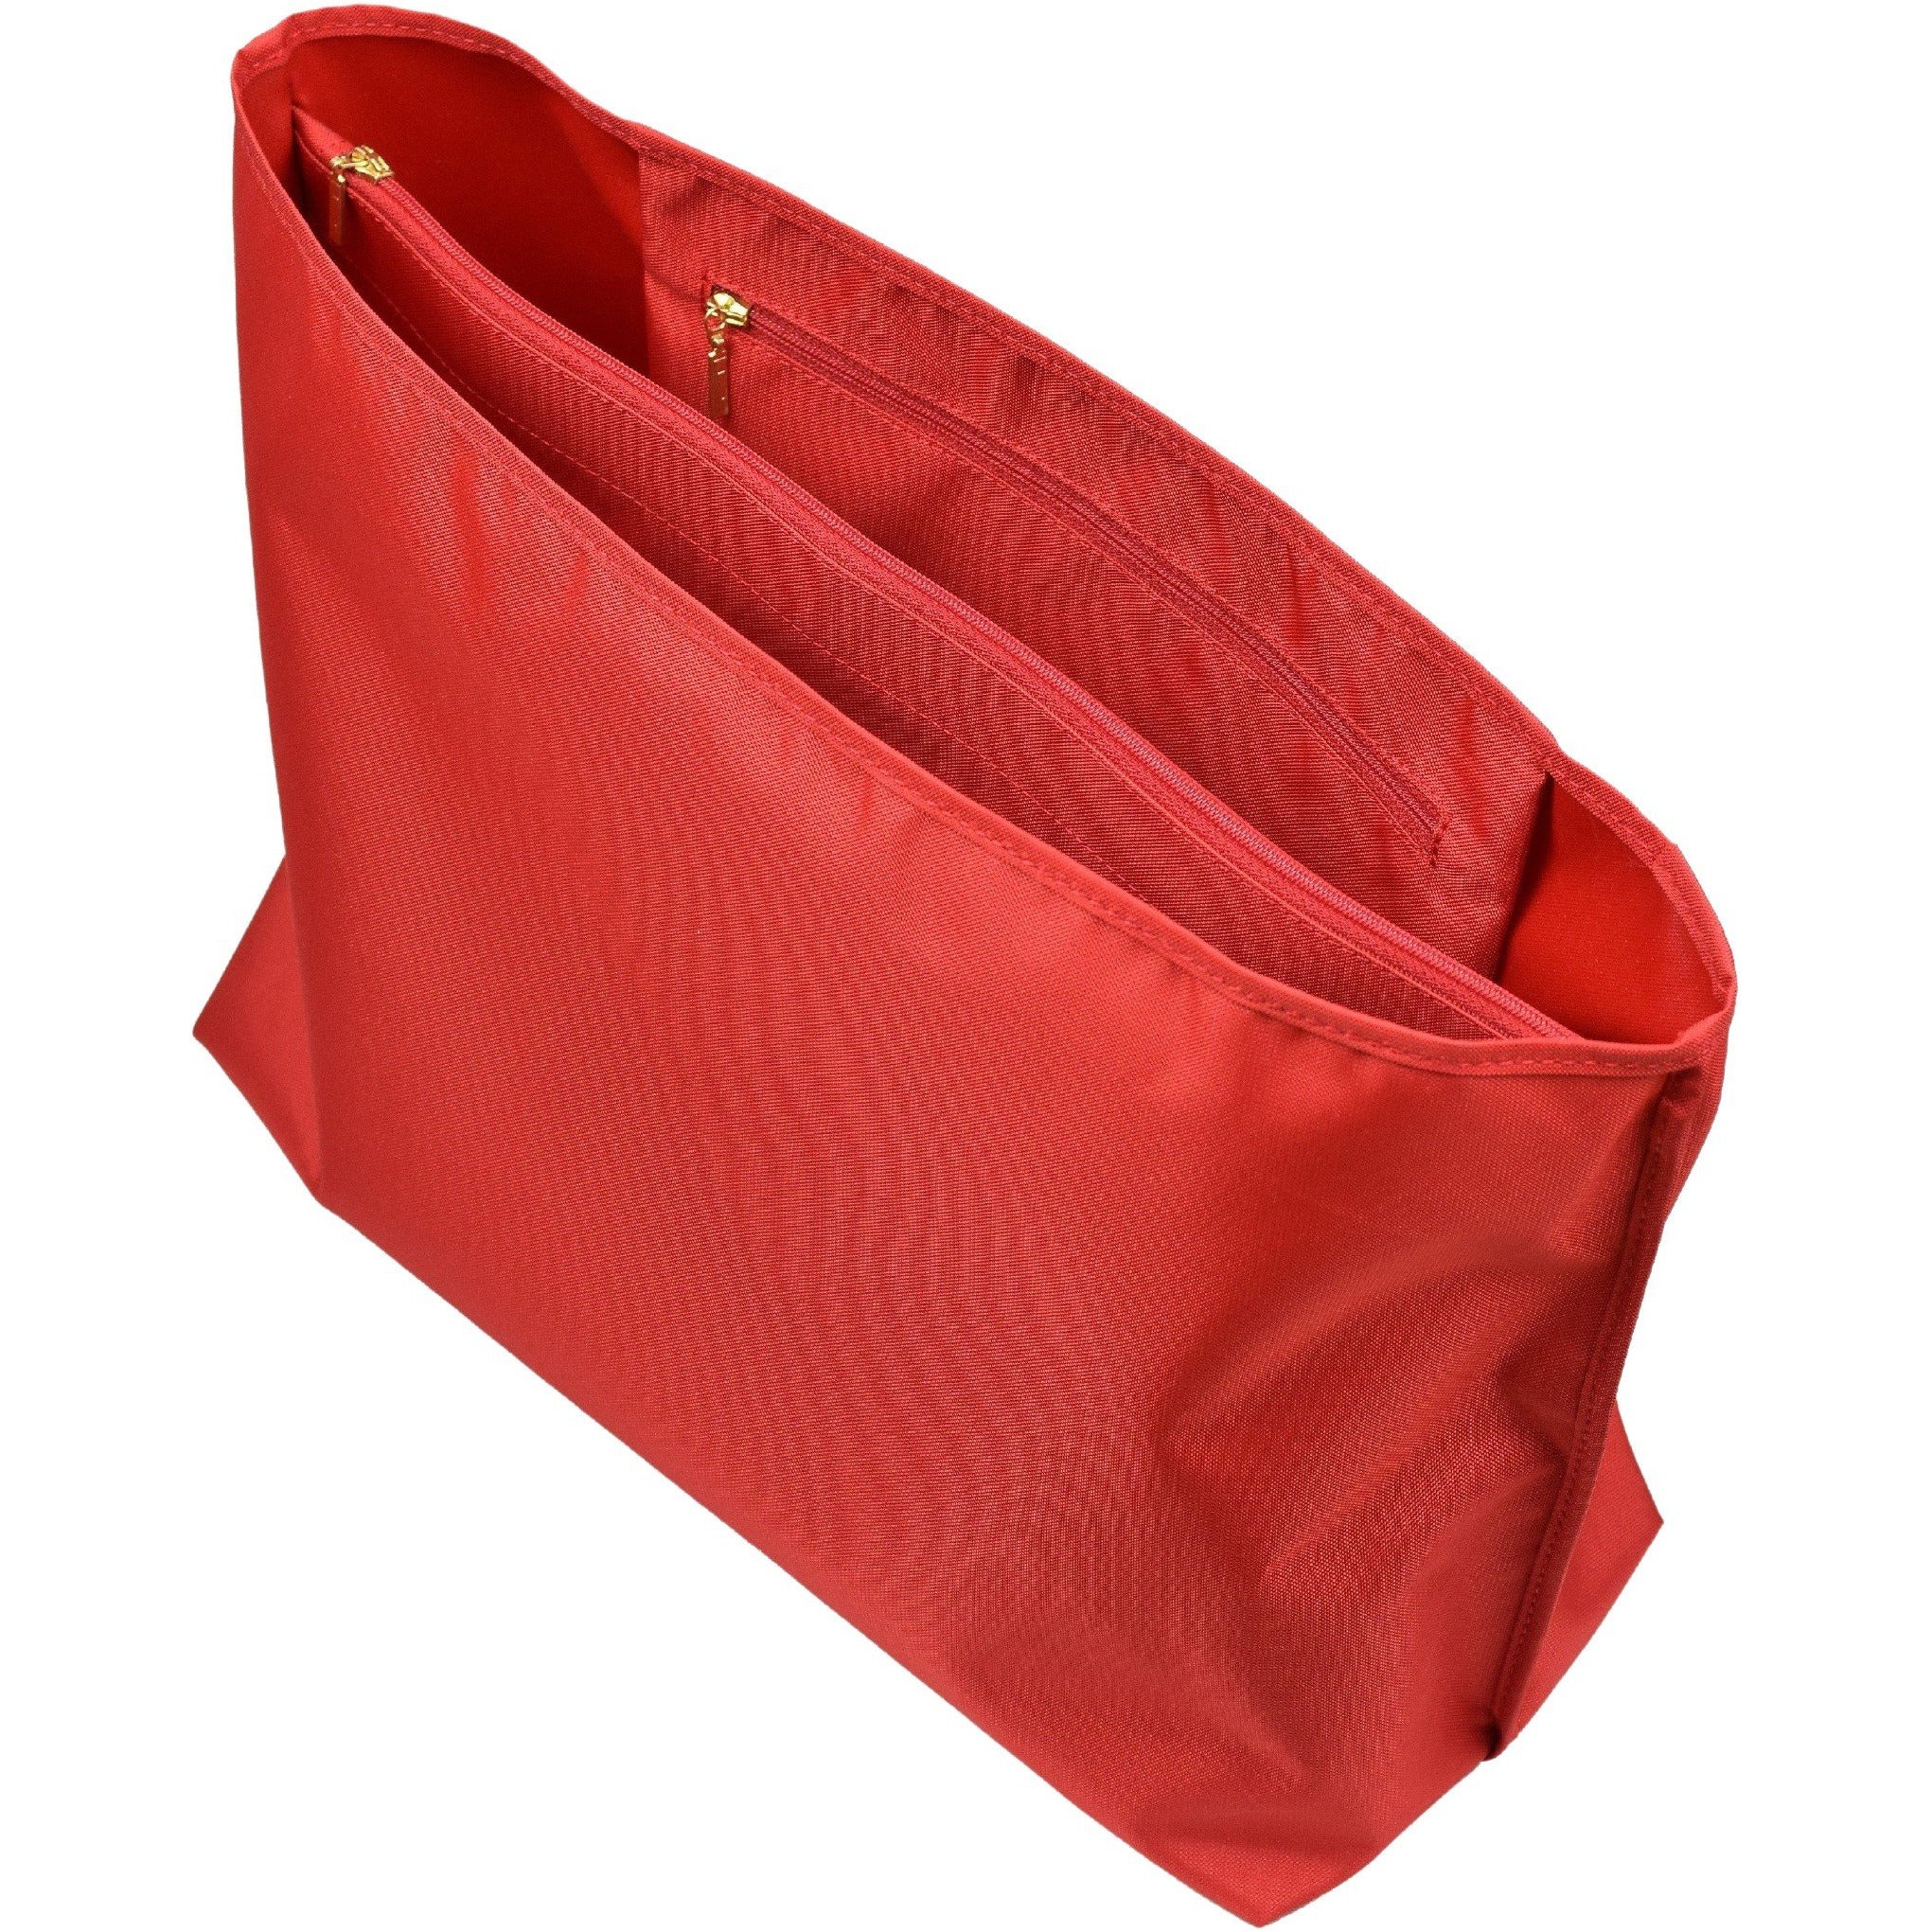 Bisenzio Ruby Shopper - LAND Leather Goods